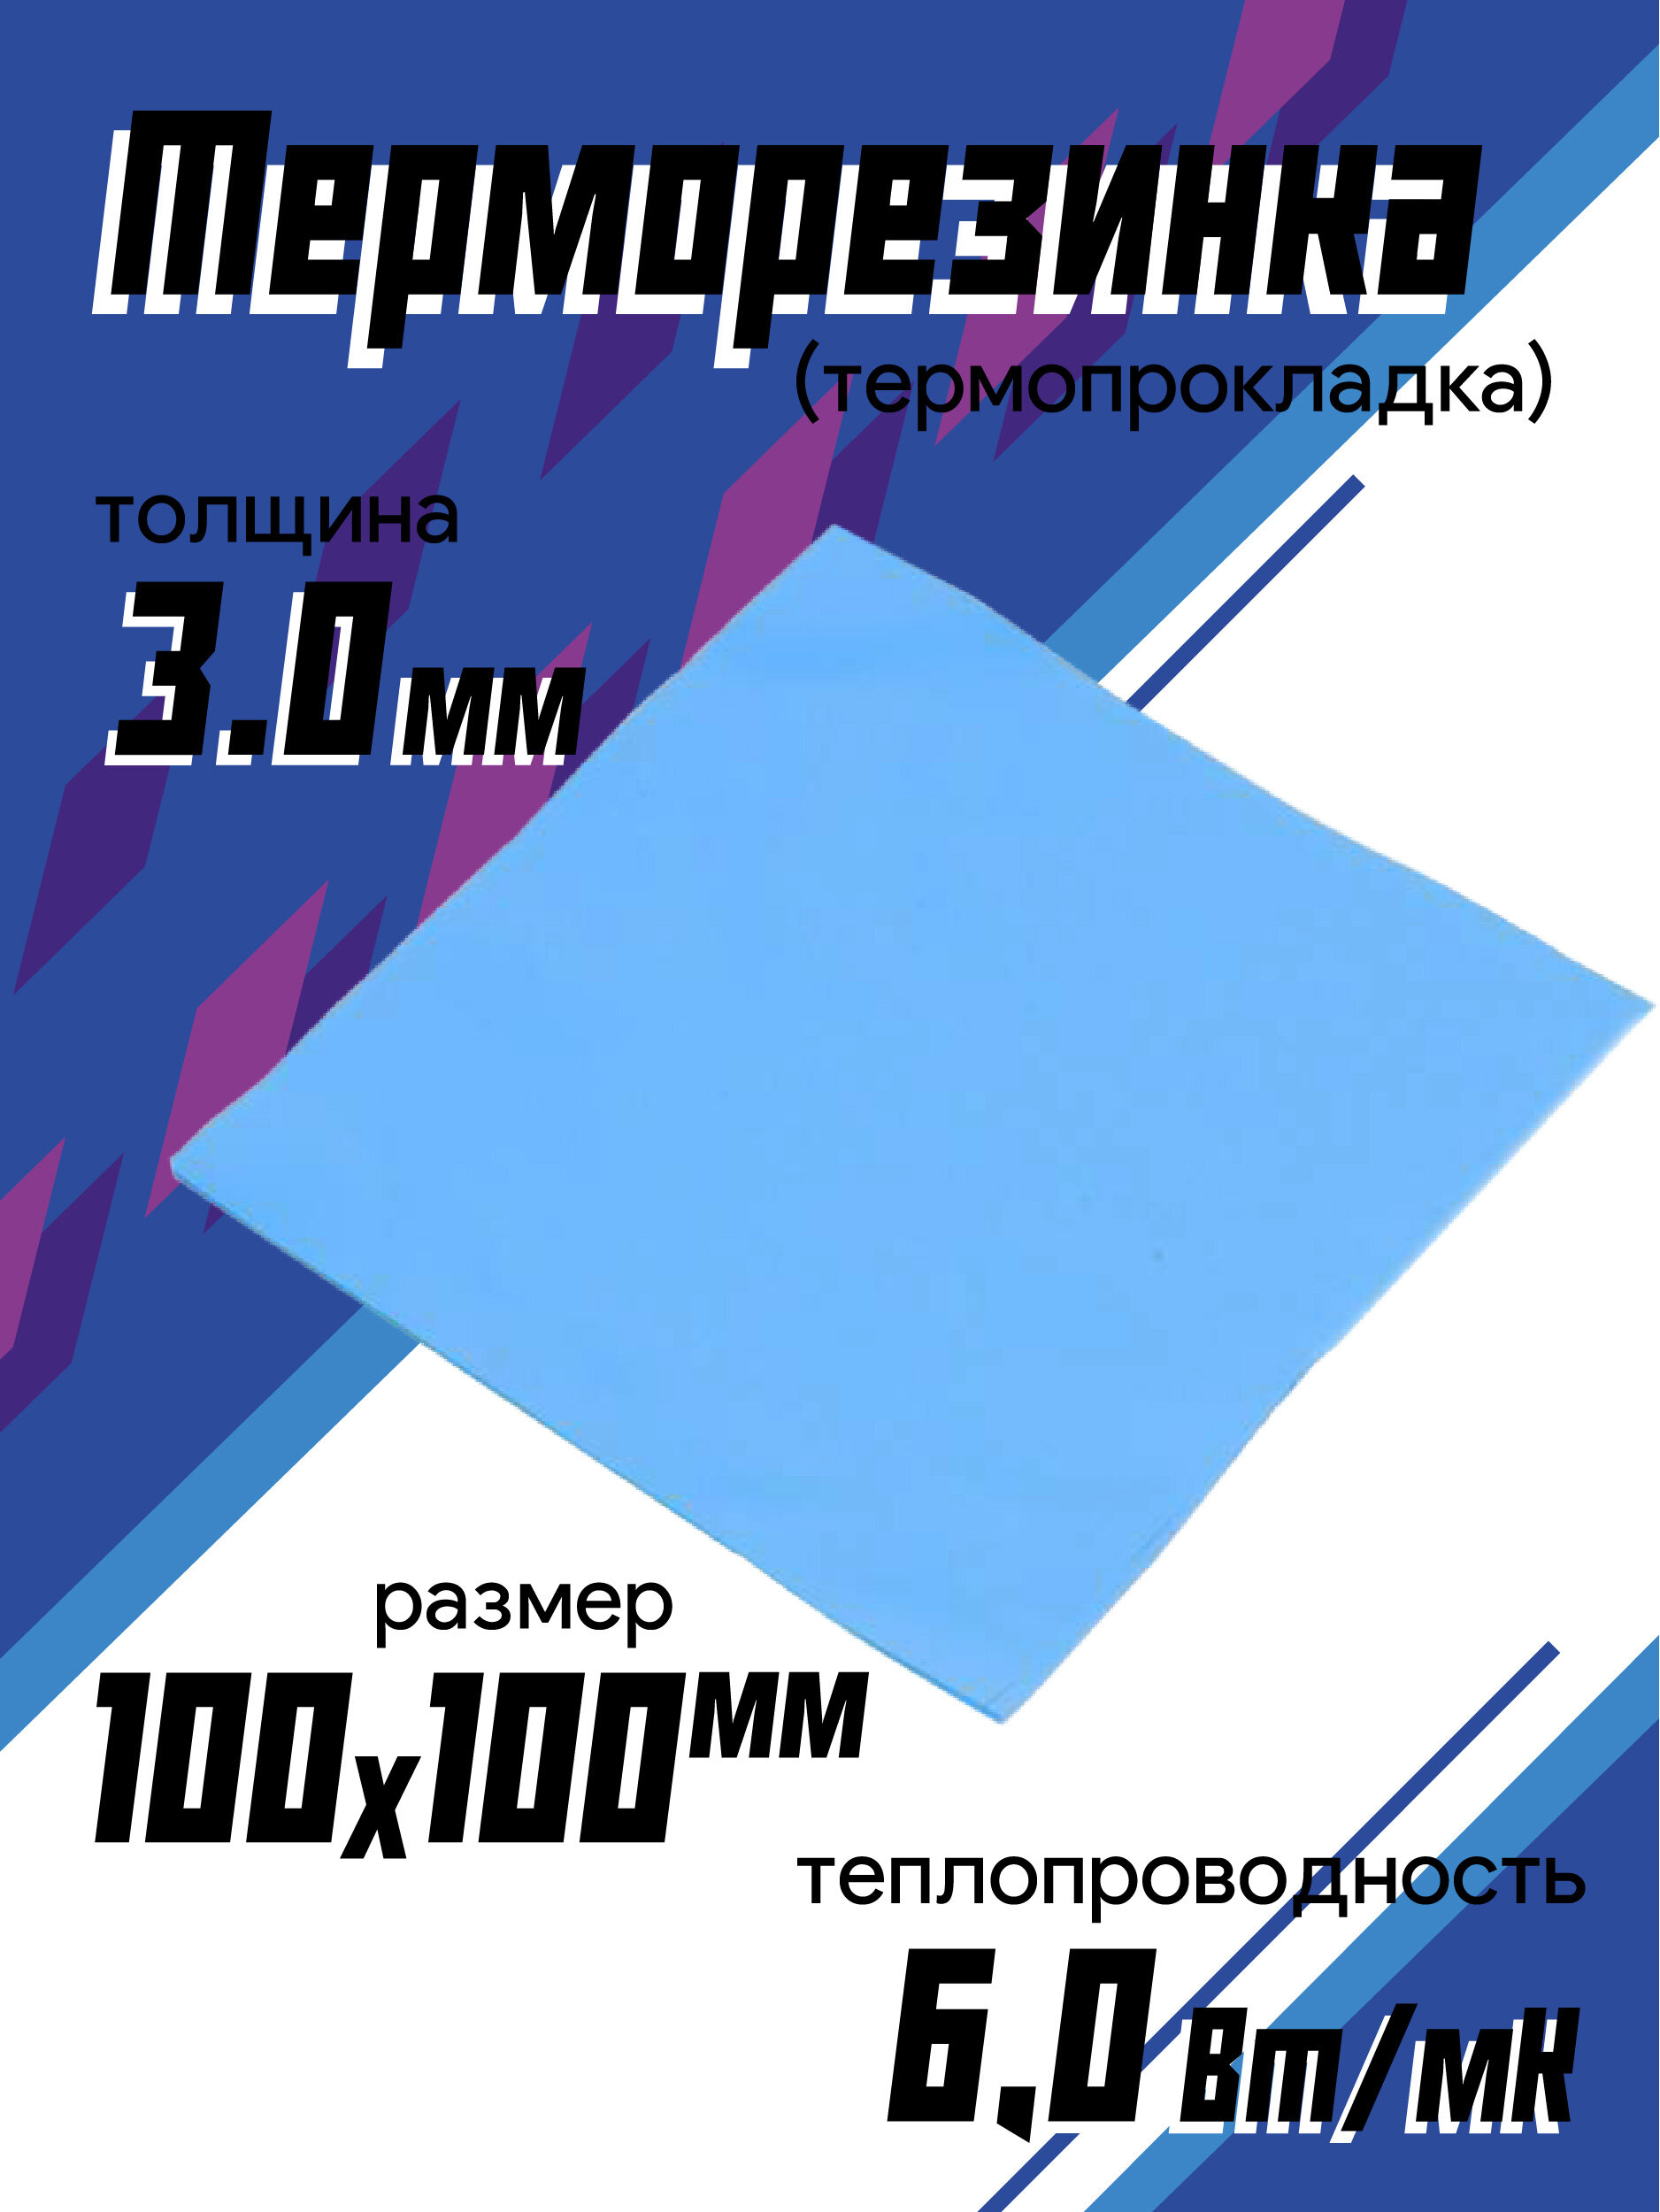 Терморезинка (thermal pad) 100х100 мм толщина 3.0 мм